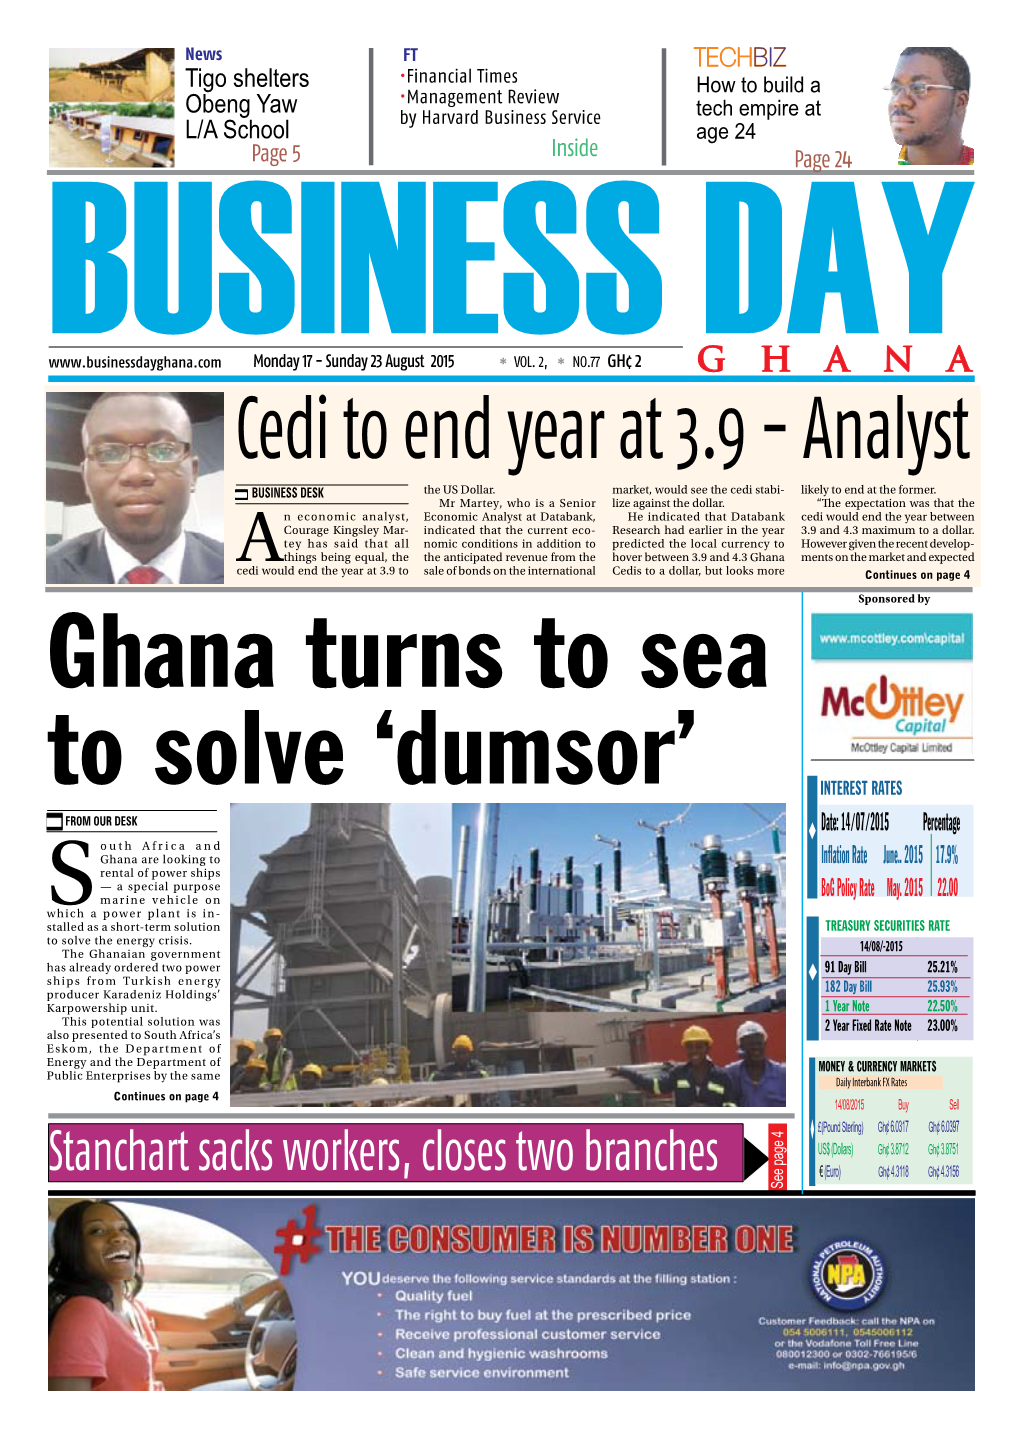 Business Day Ghana